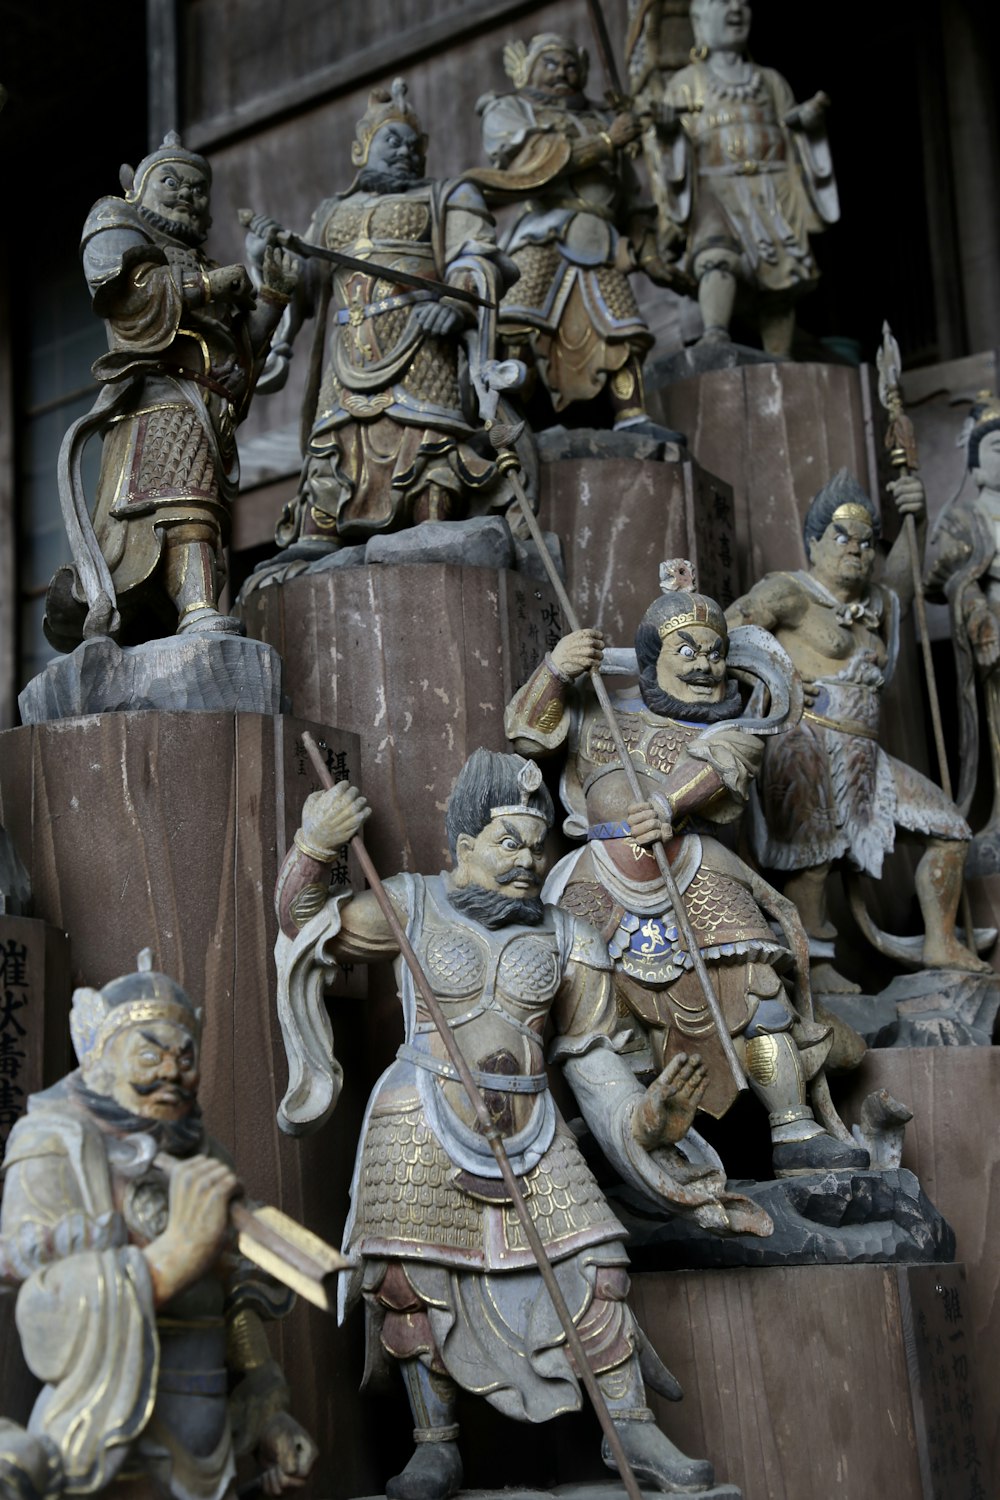 brown terracotta soldier figurines